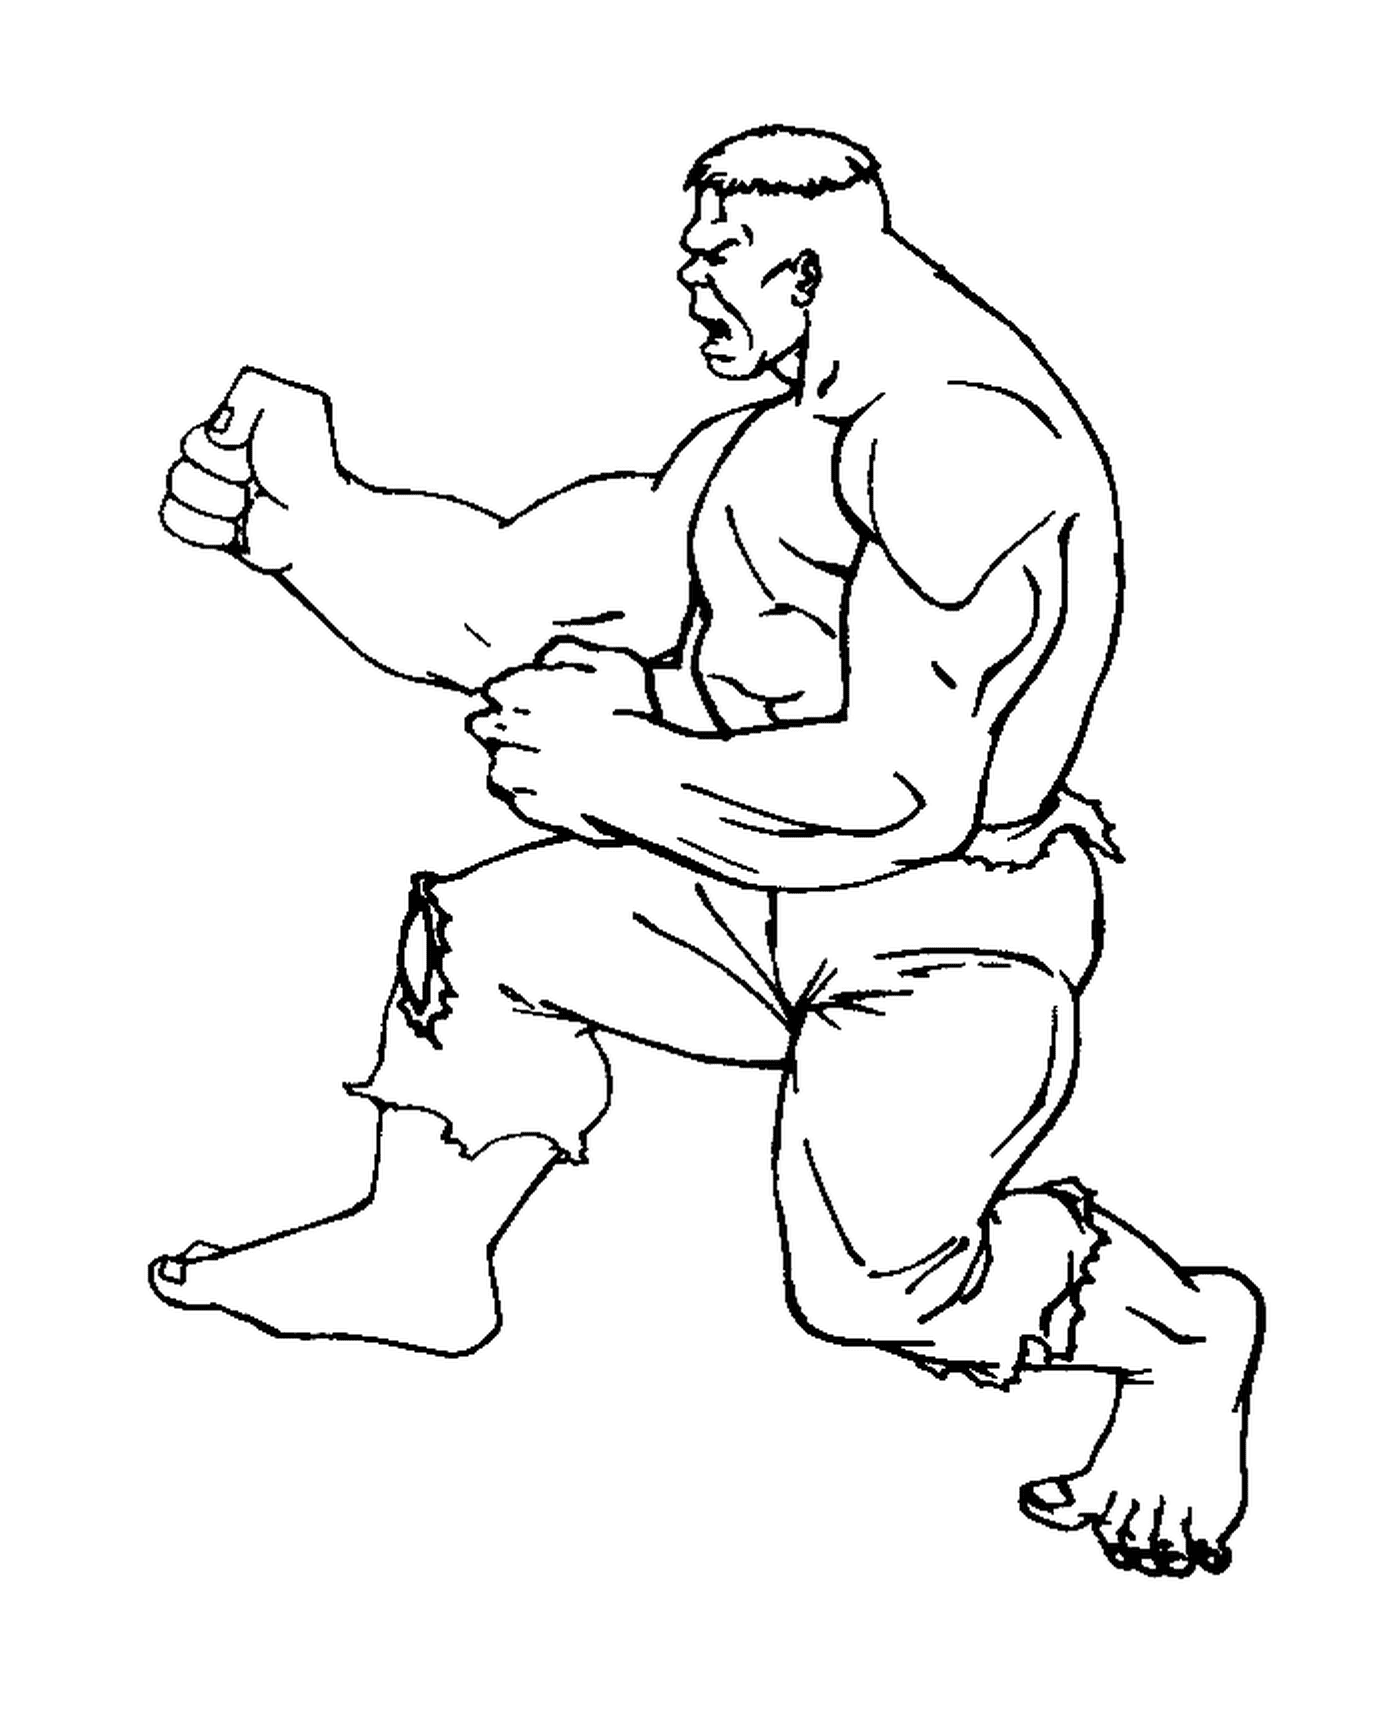  Hulk praktiziert Karate 